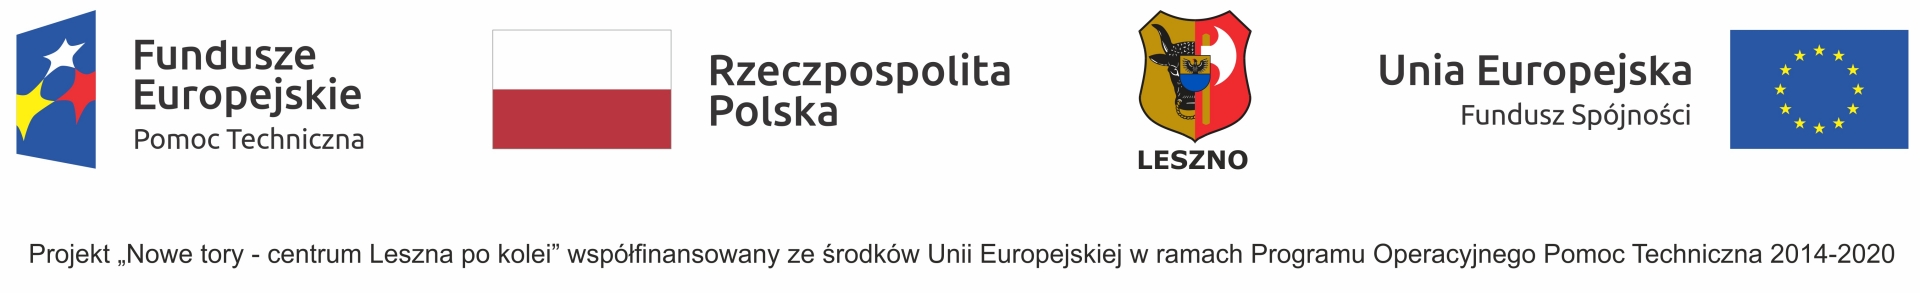 Logotypy unijne 2018_po